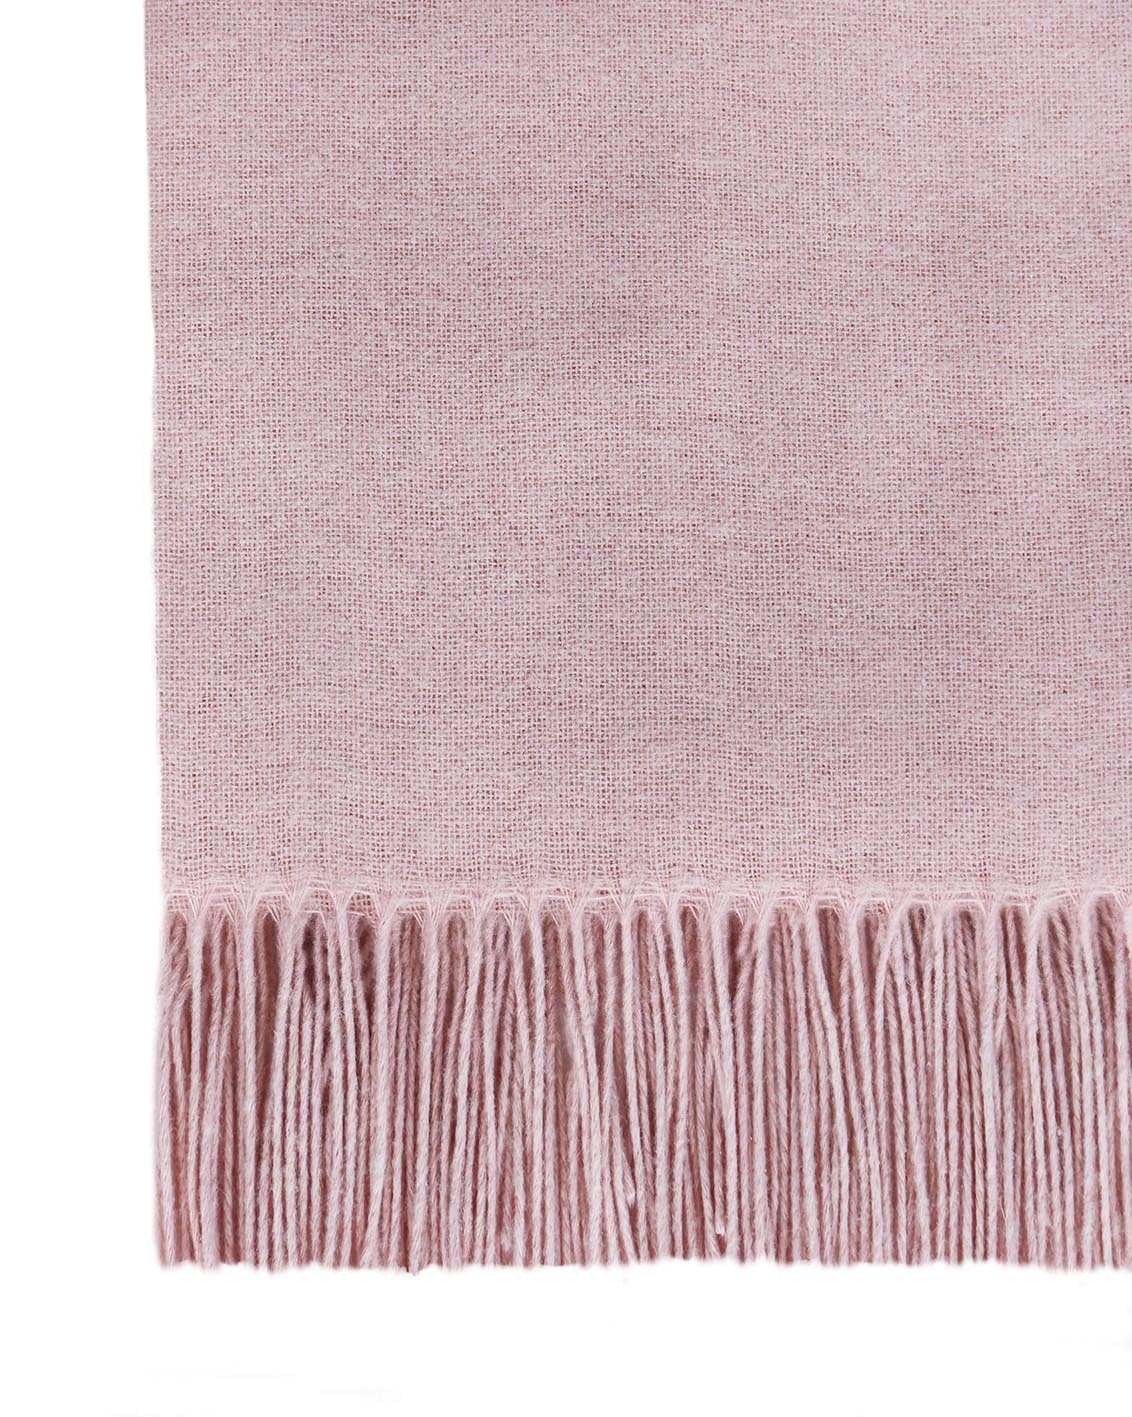 Paddington Throw - Fine Wool Blend - Blush - image2